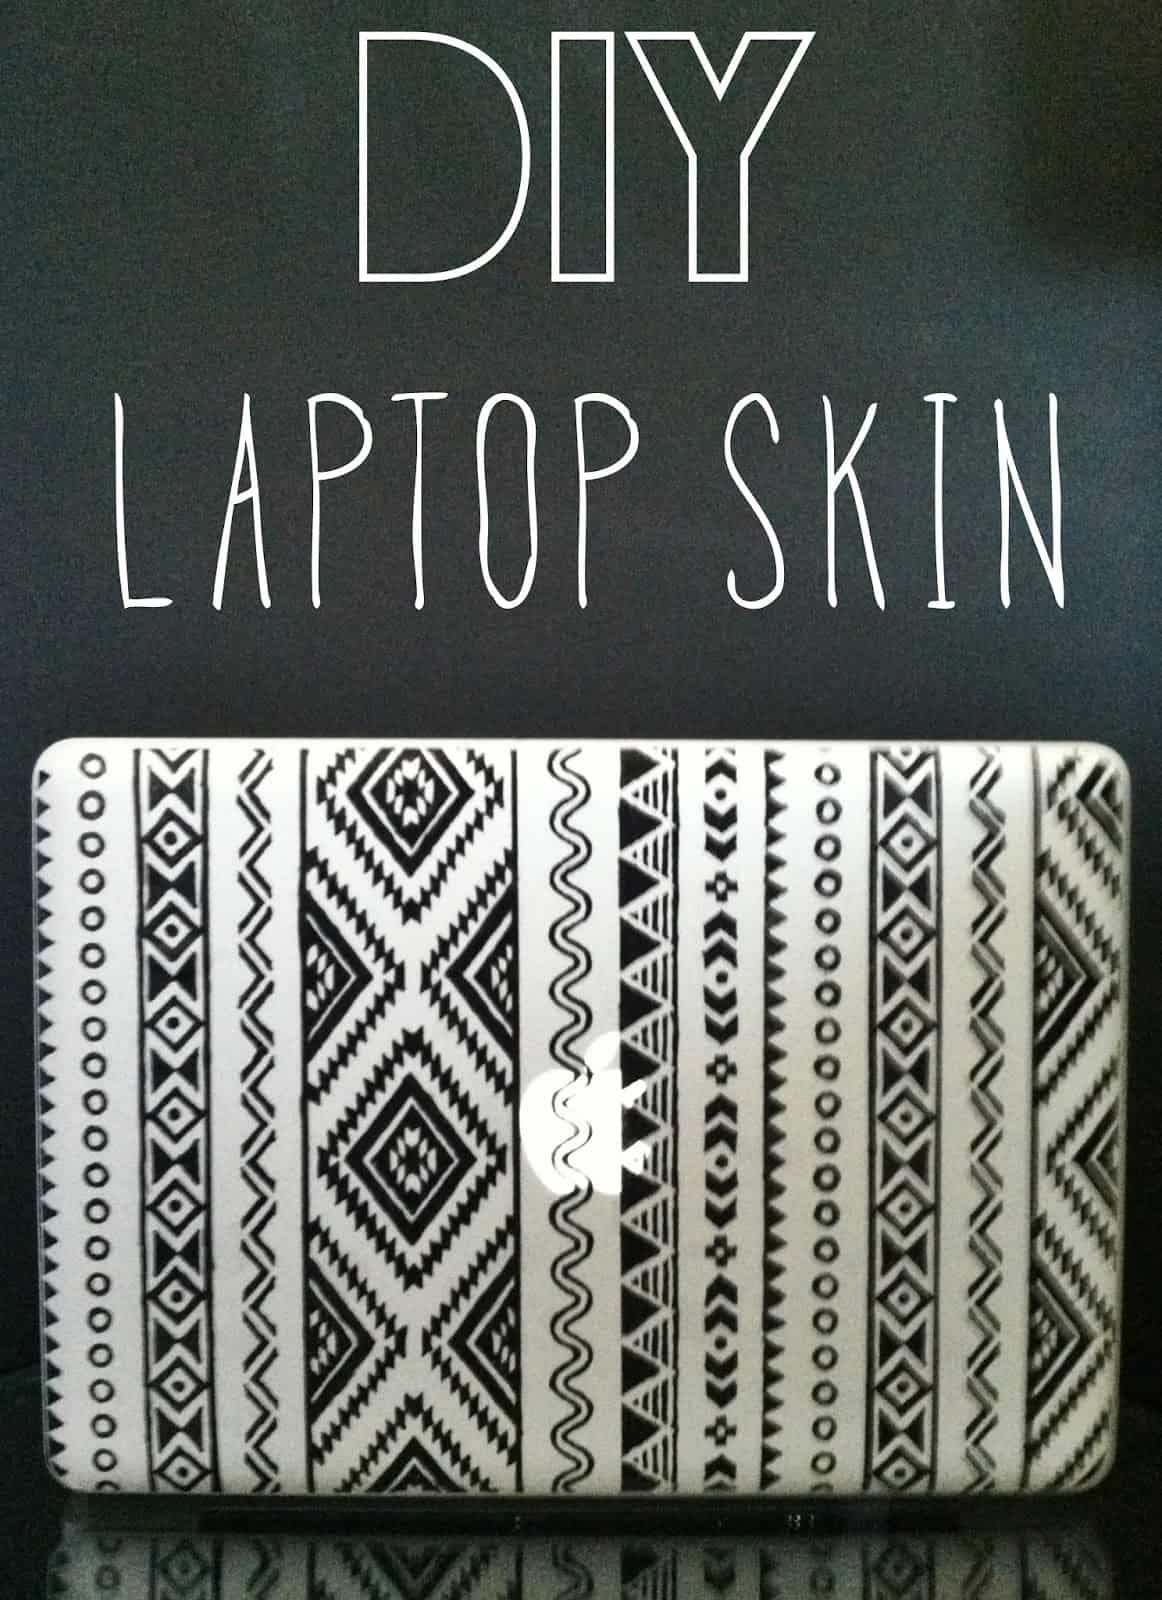 Printed wax paper and laminate laptop skin design